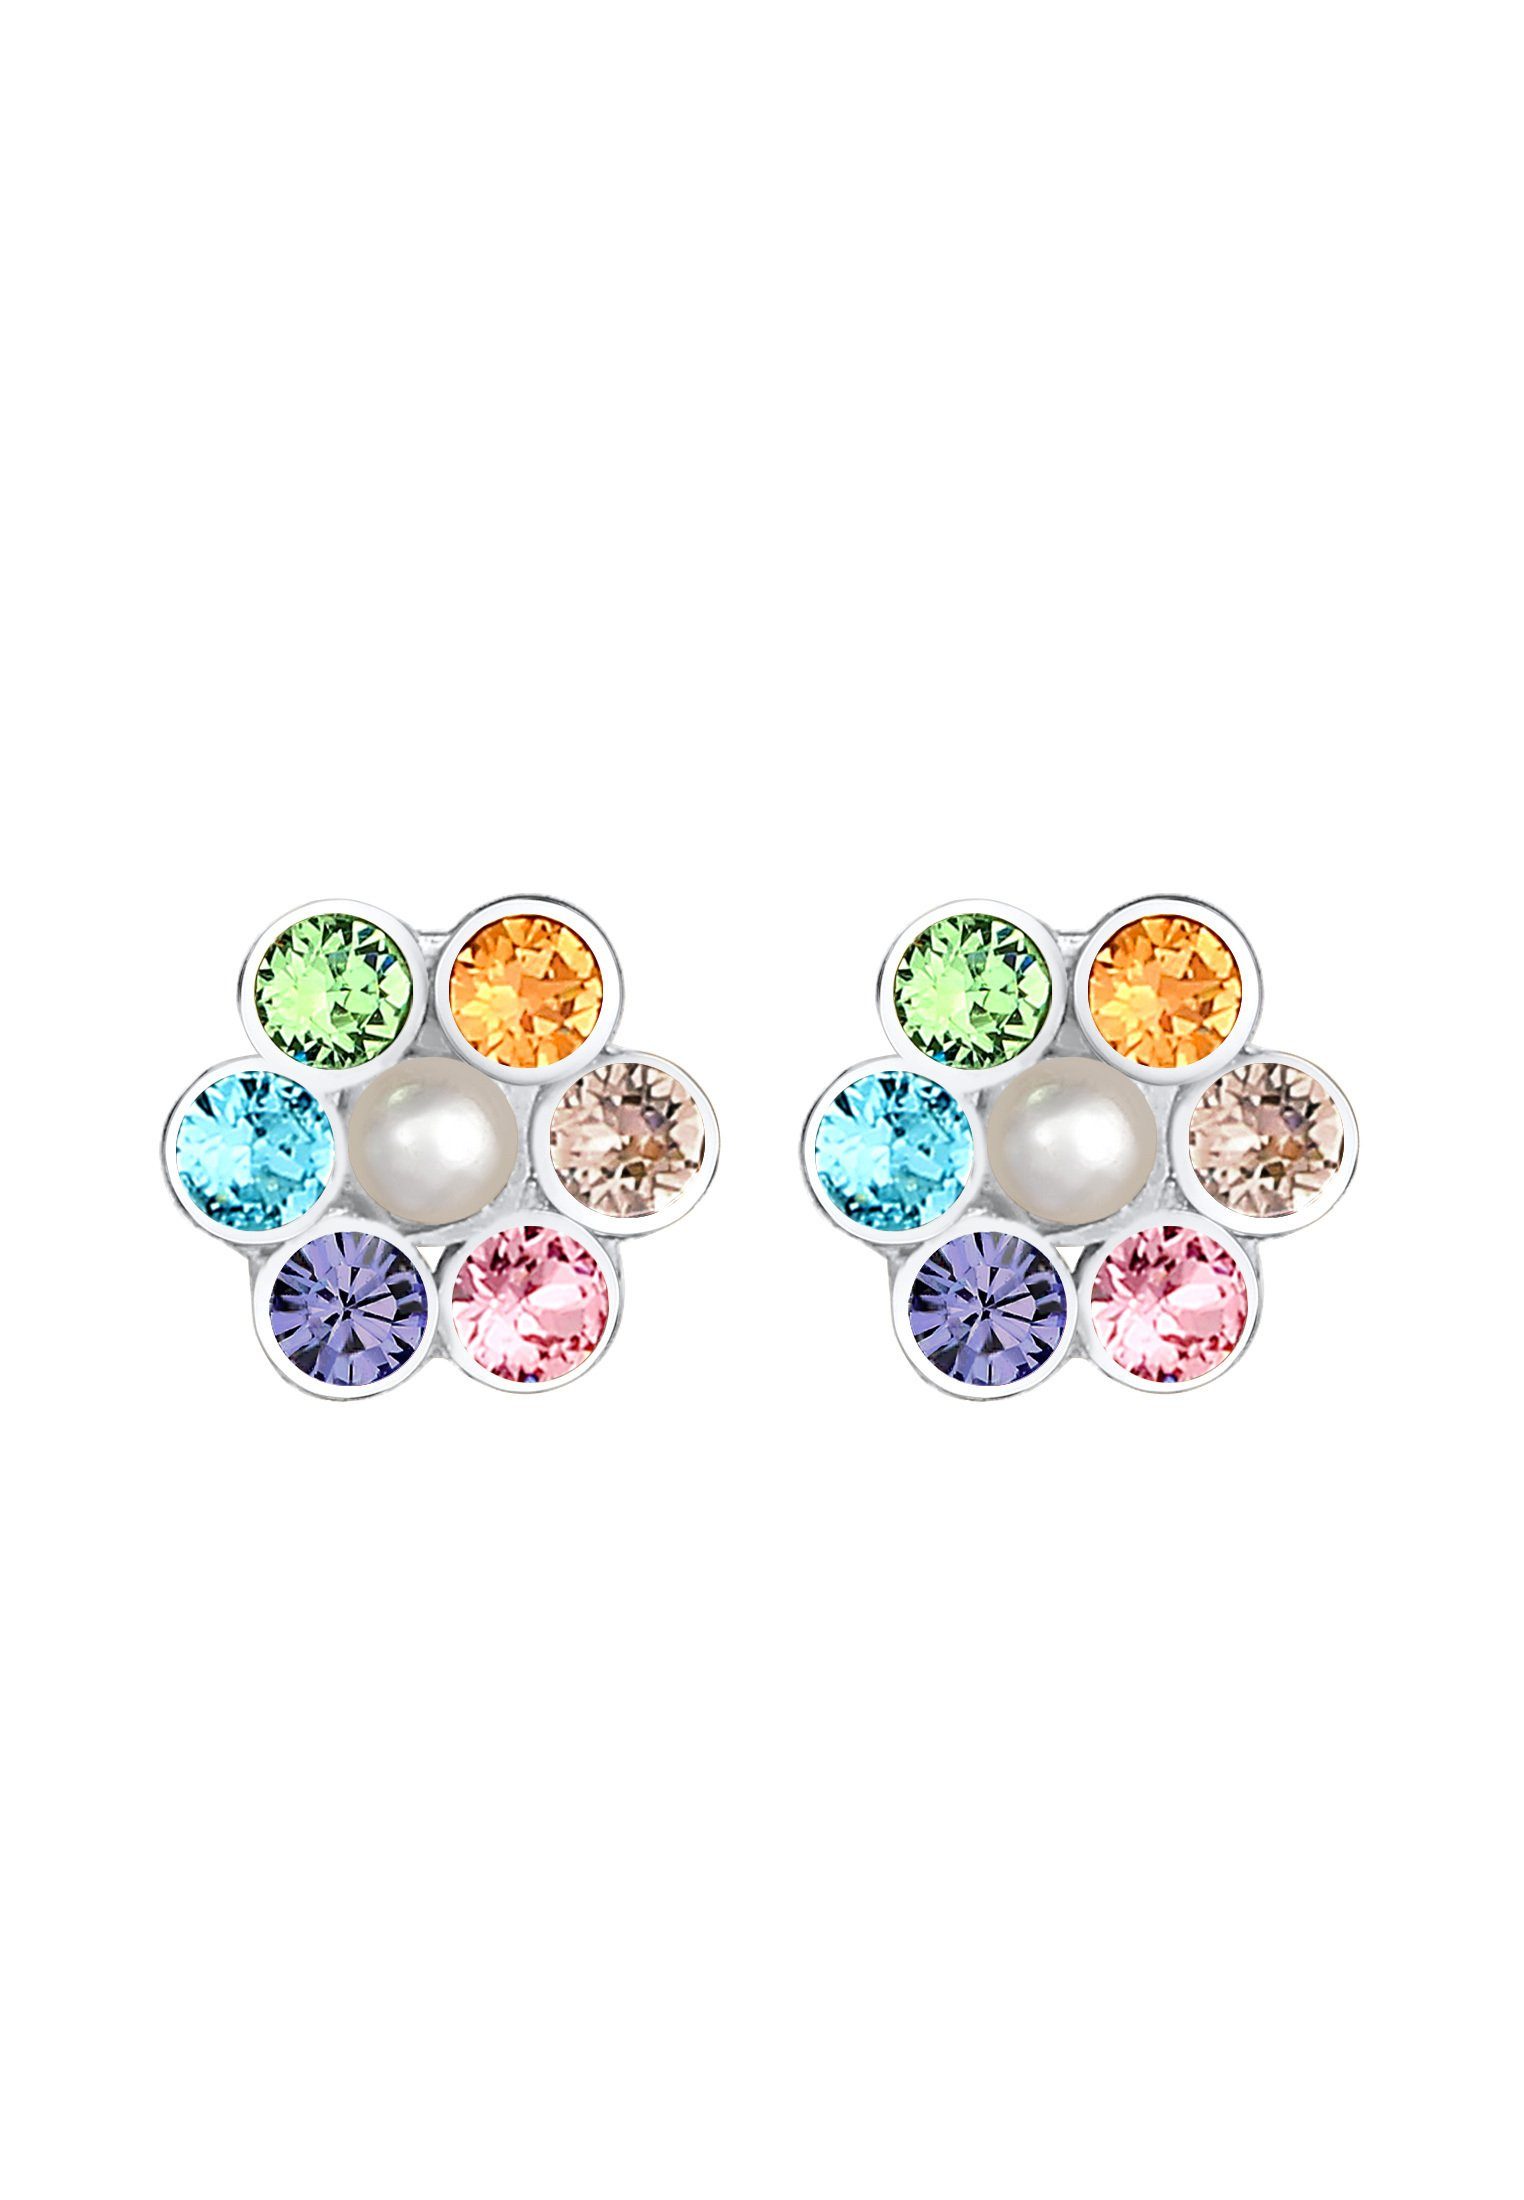 Elli Paar Ohrstecker Kinder Blume Synthetische Perle Regenbogen Kristall  925 Silber, Farbenfrohes Accessoire mit zauberhafter Perle | Ohrhänger